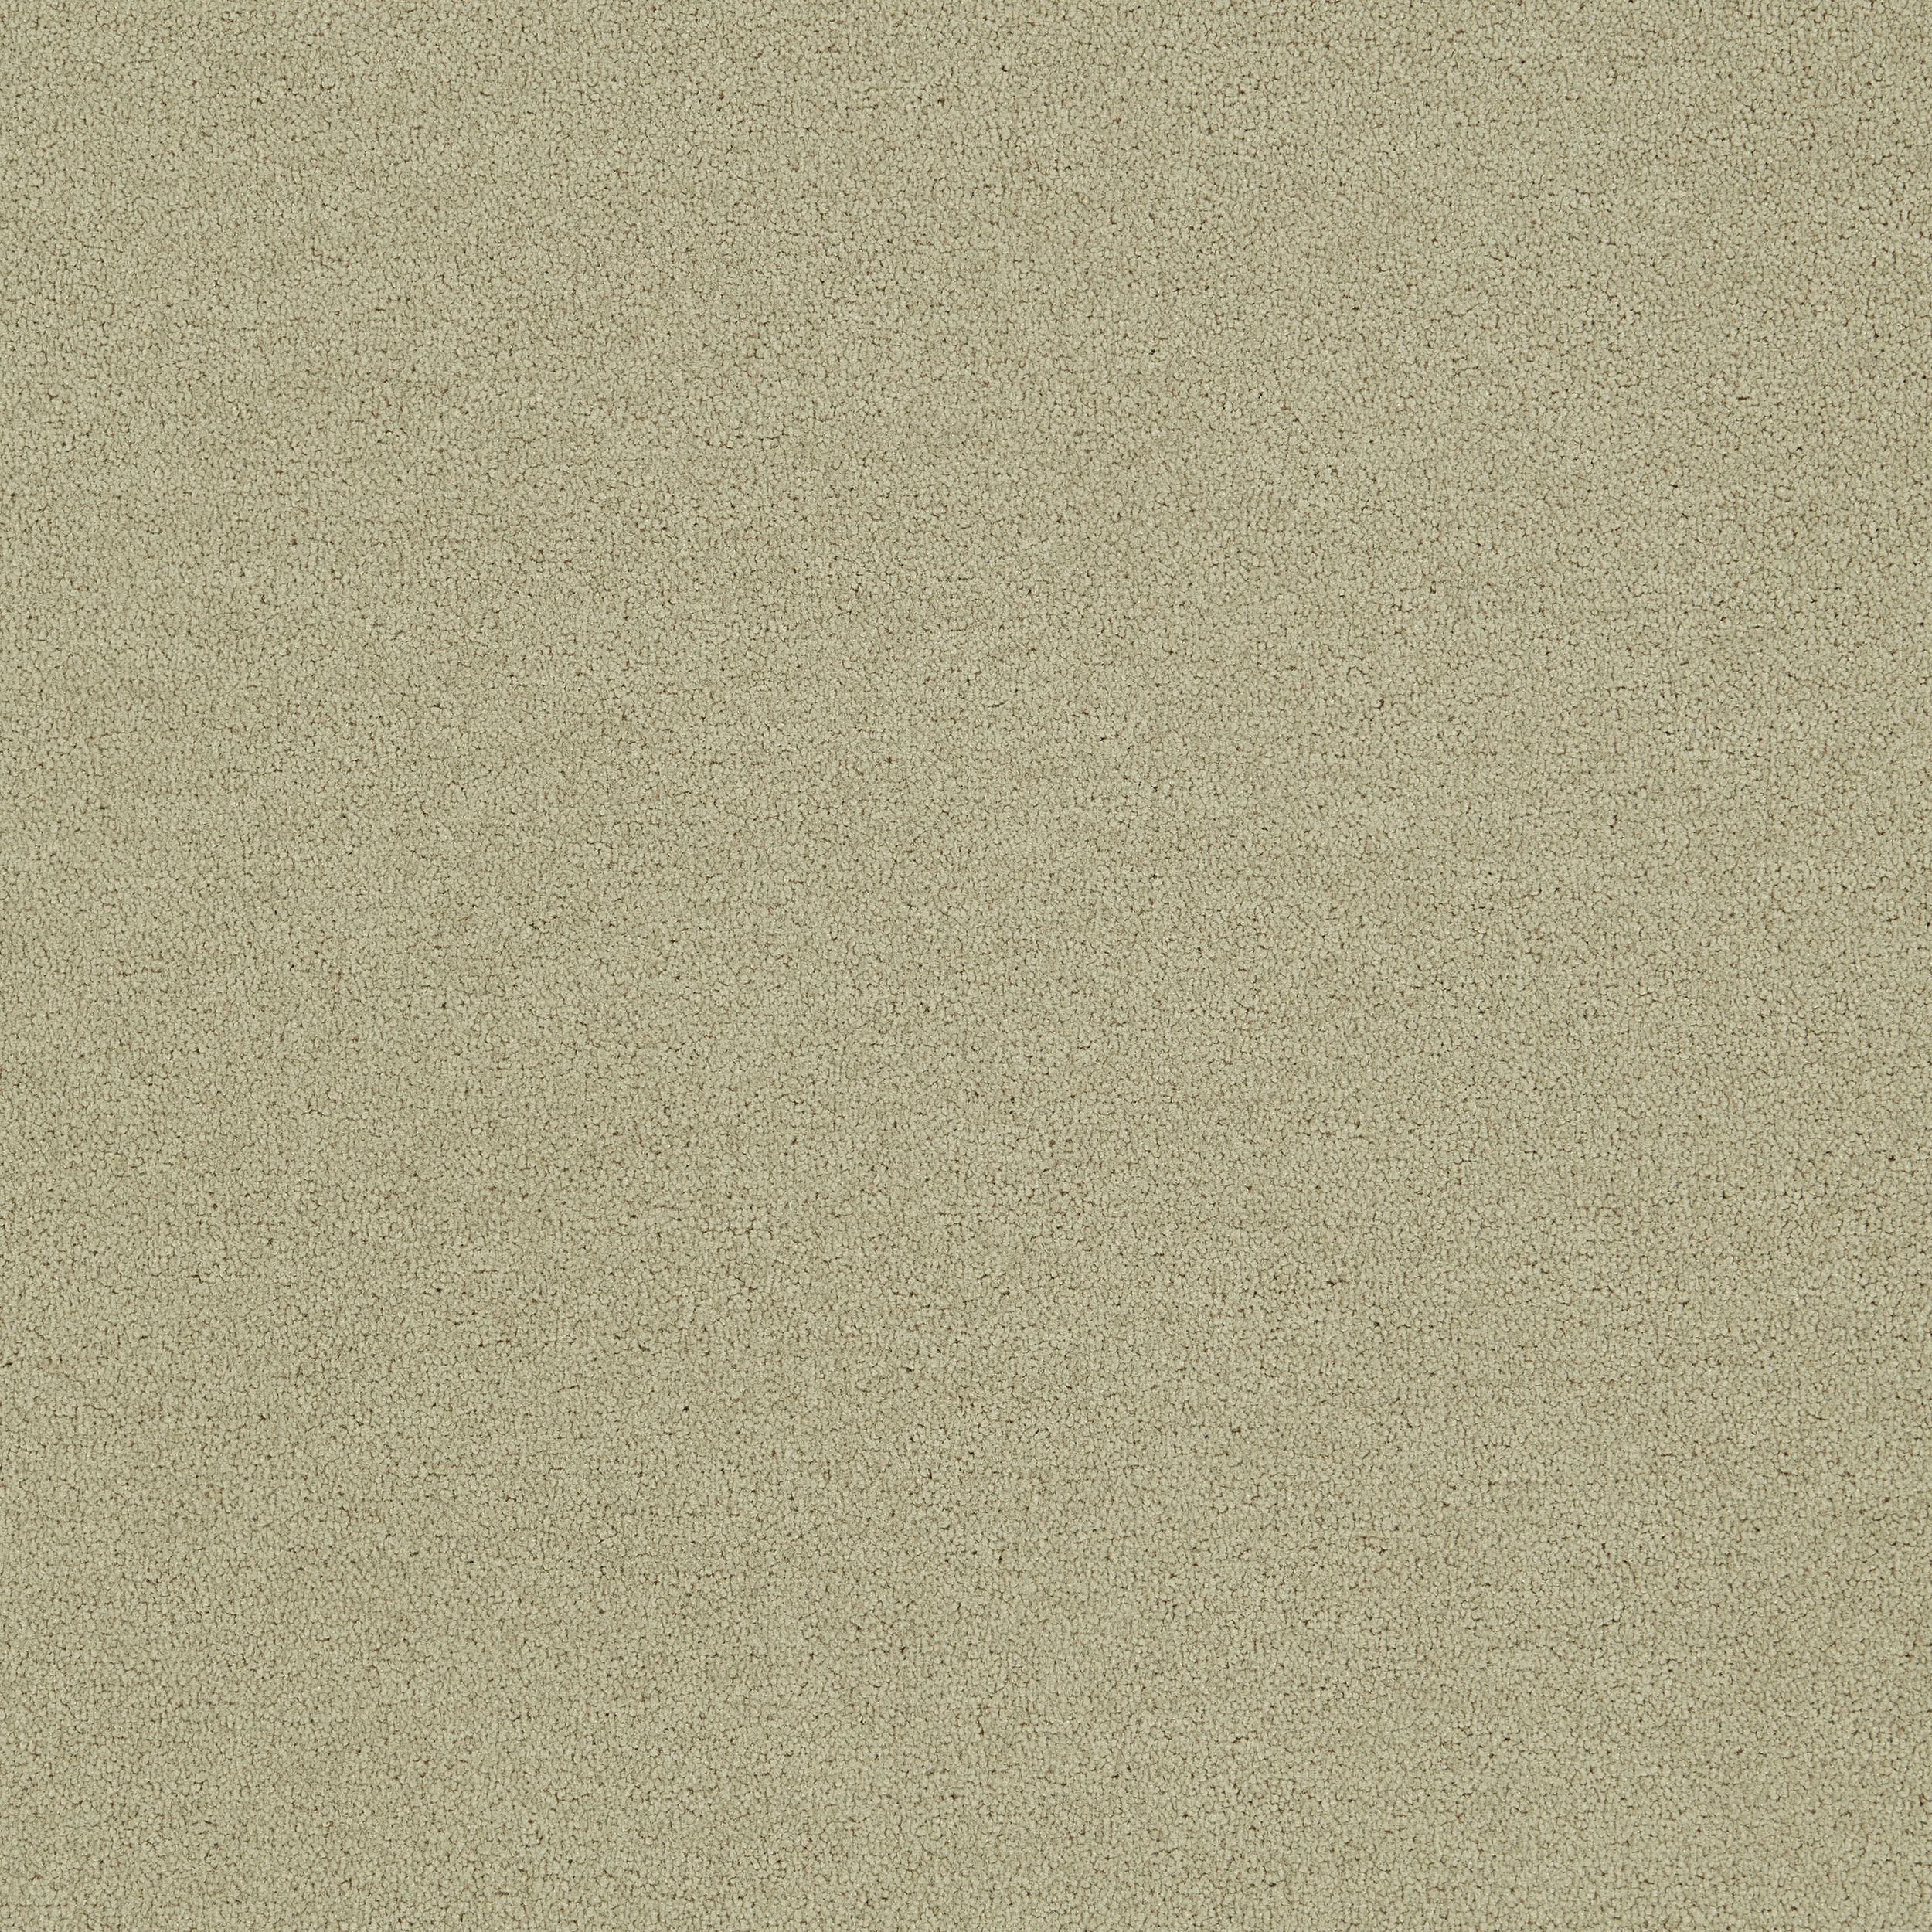 Polichrome Solid Carpet Tile In Turtledove afbeeldingnummer 2